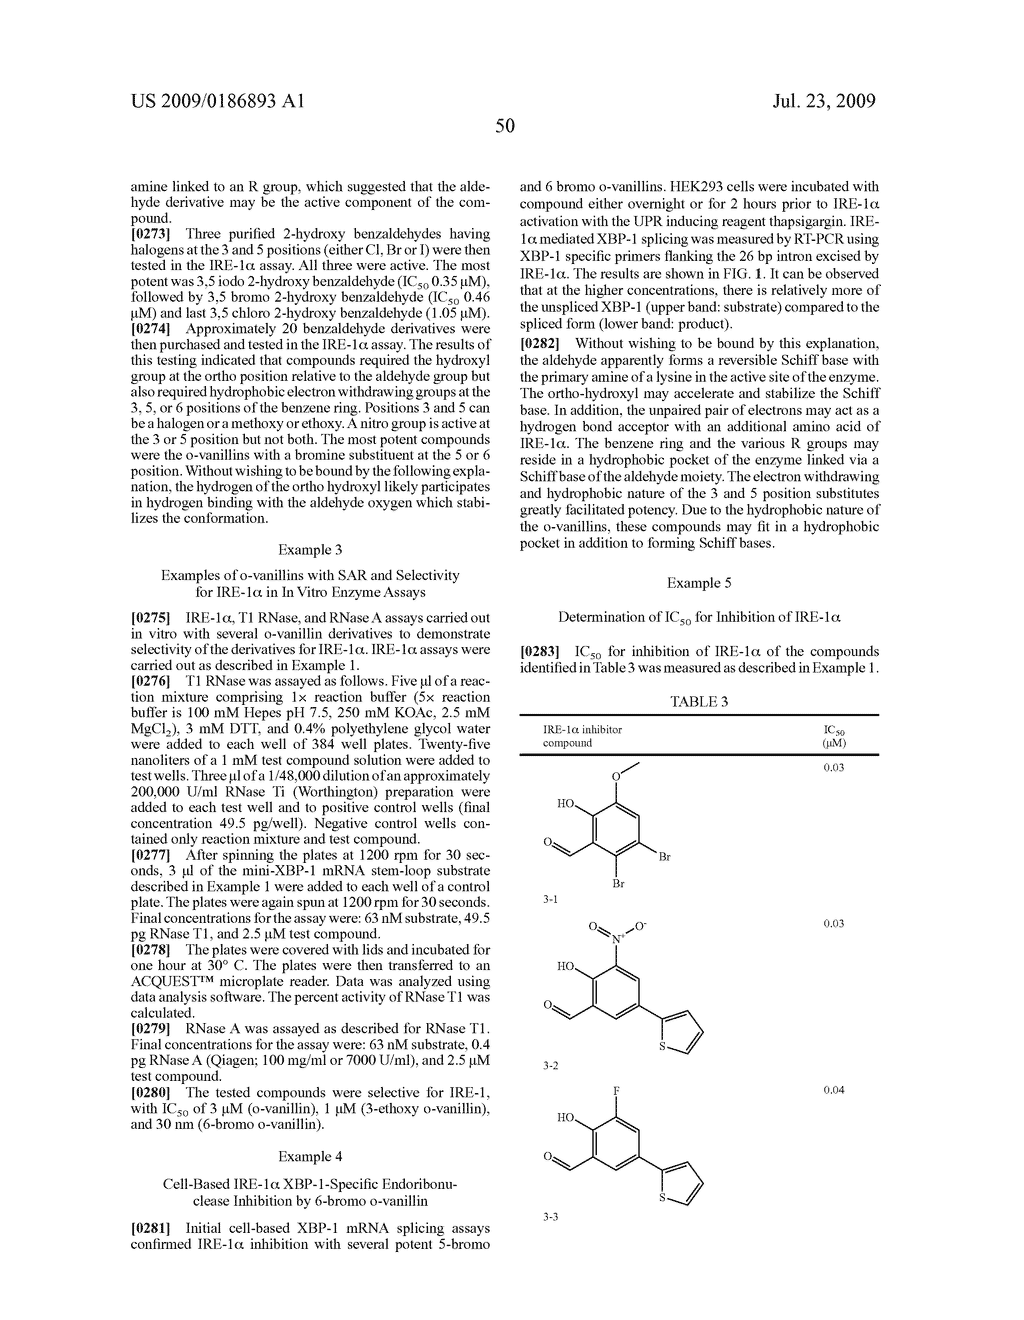 IRE-1alpha INHIBITORS - diagram, schematic, and image 62